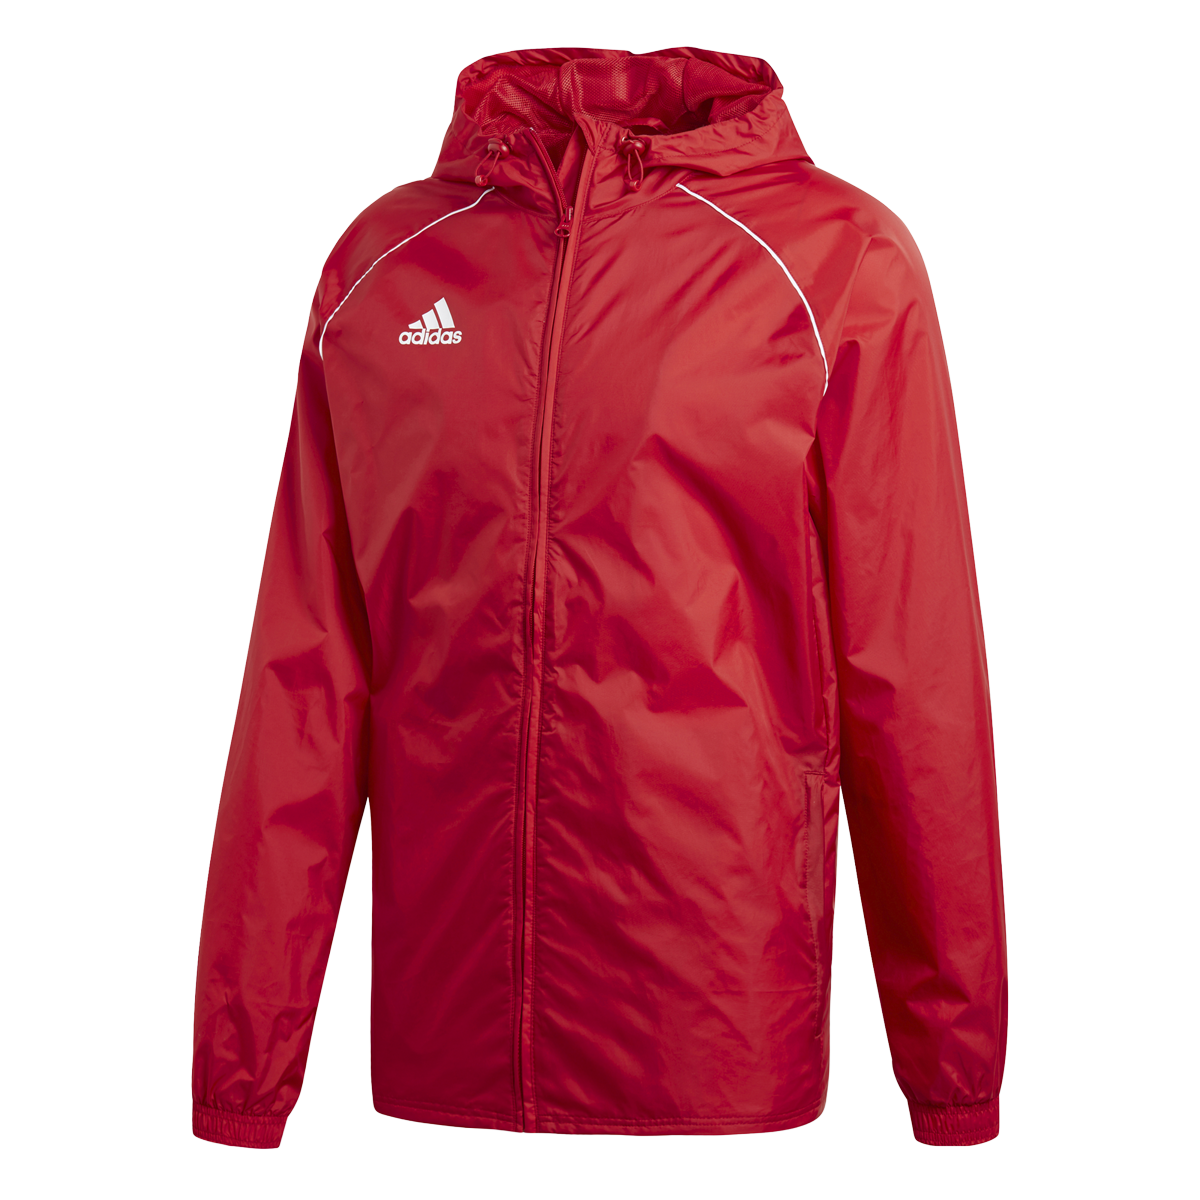 Adidas Core 18 Rain Jacket červená UK M Pánské